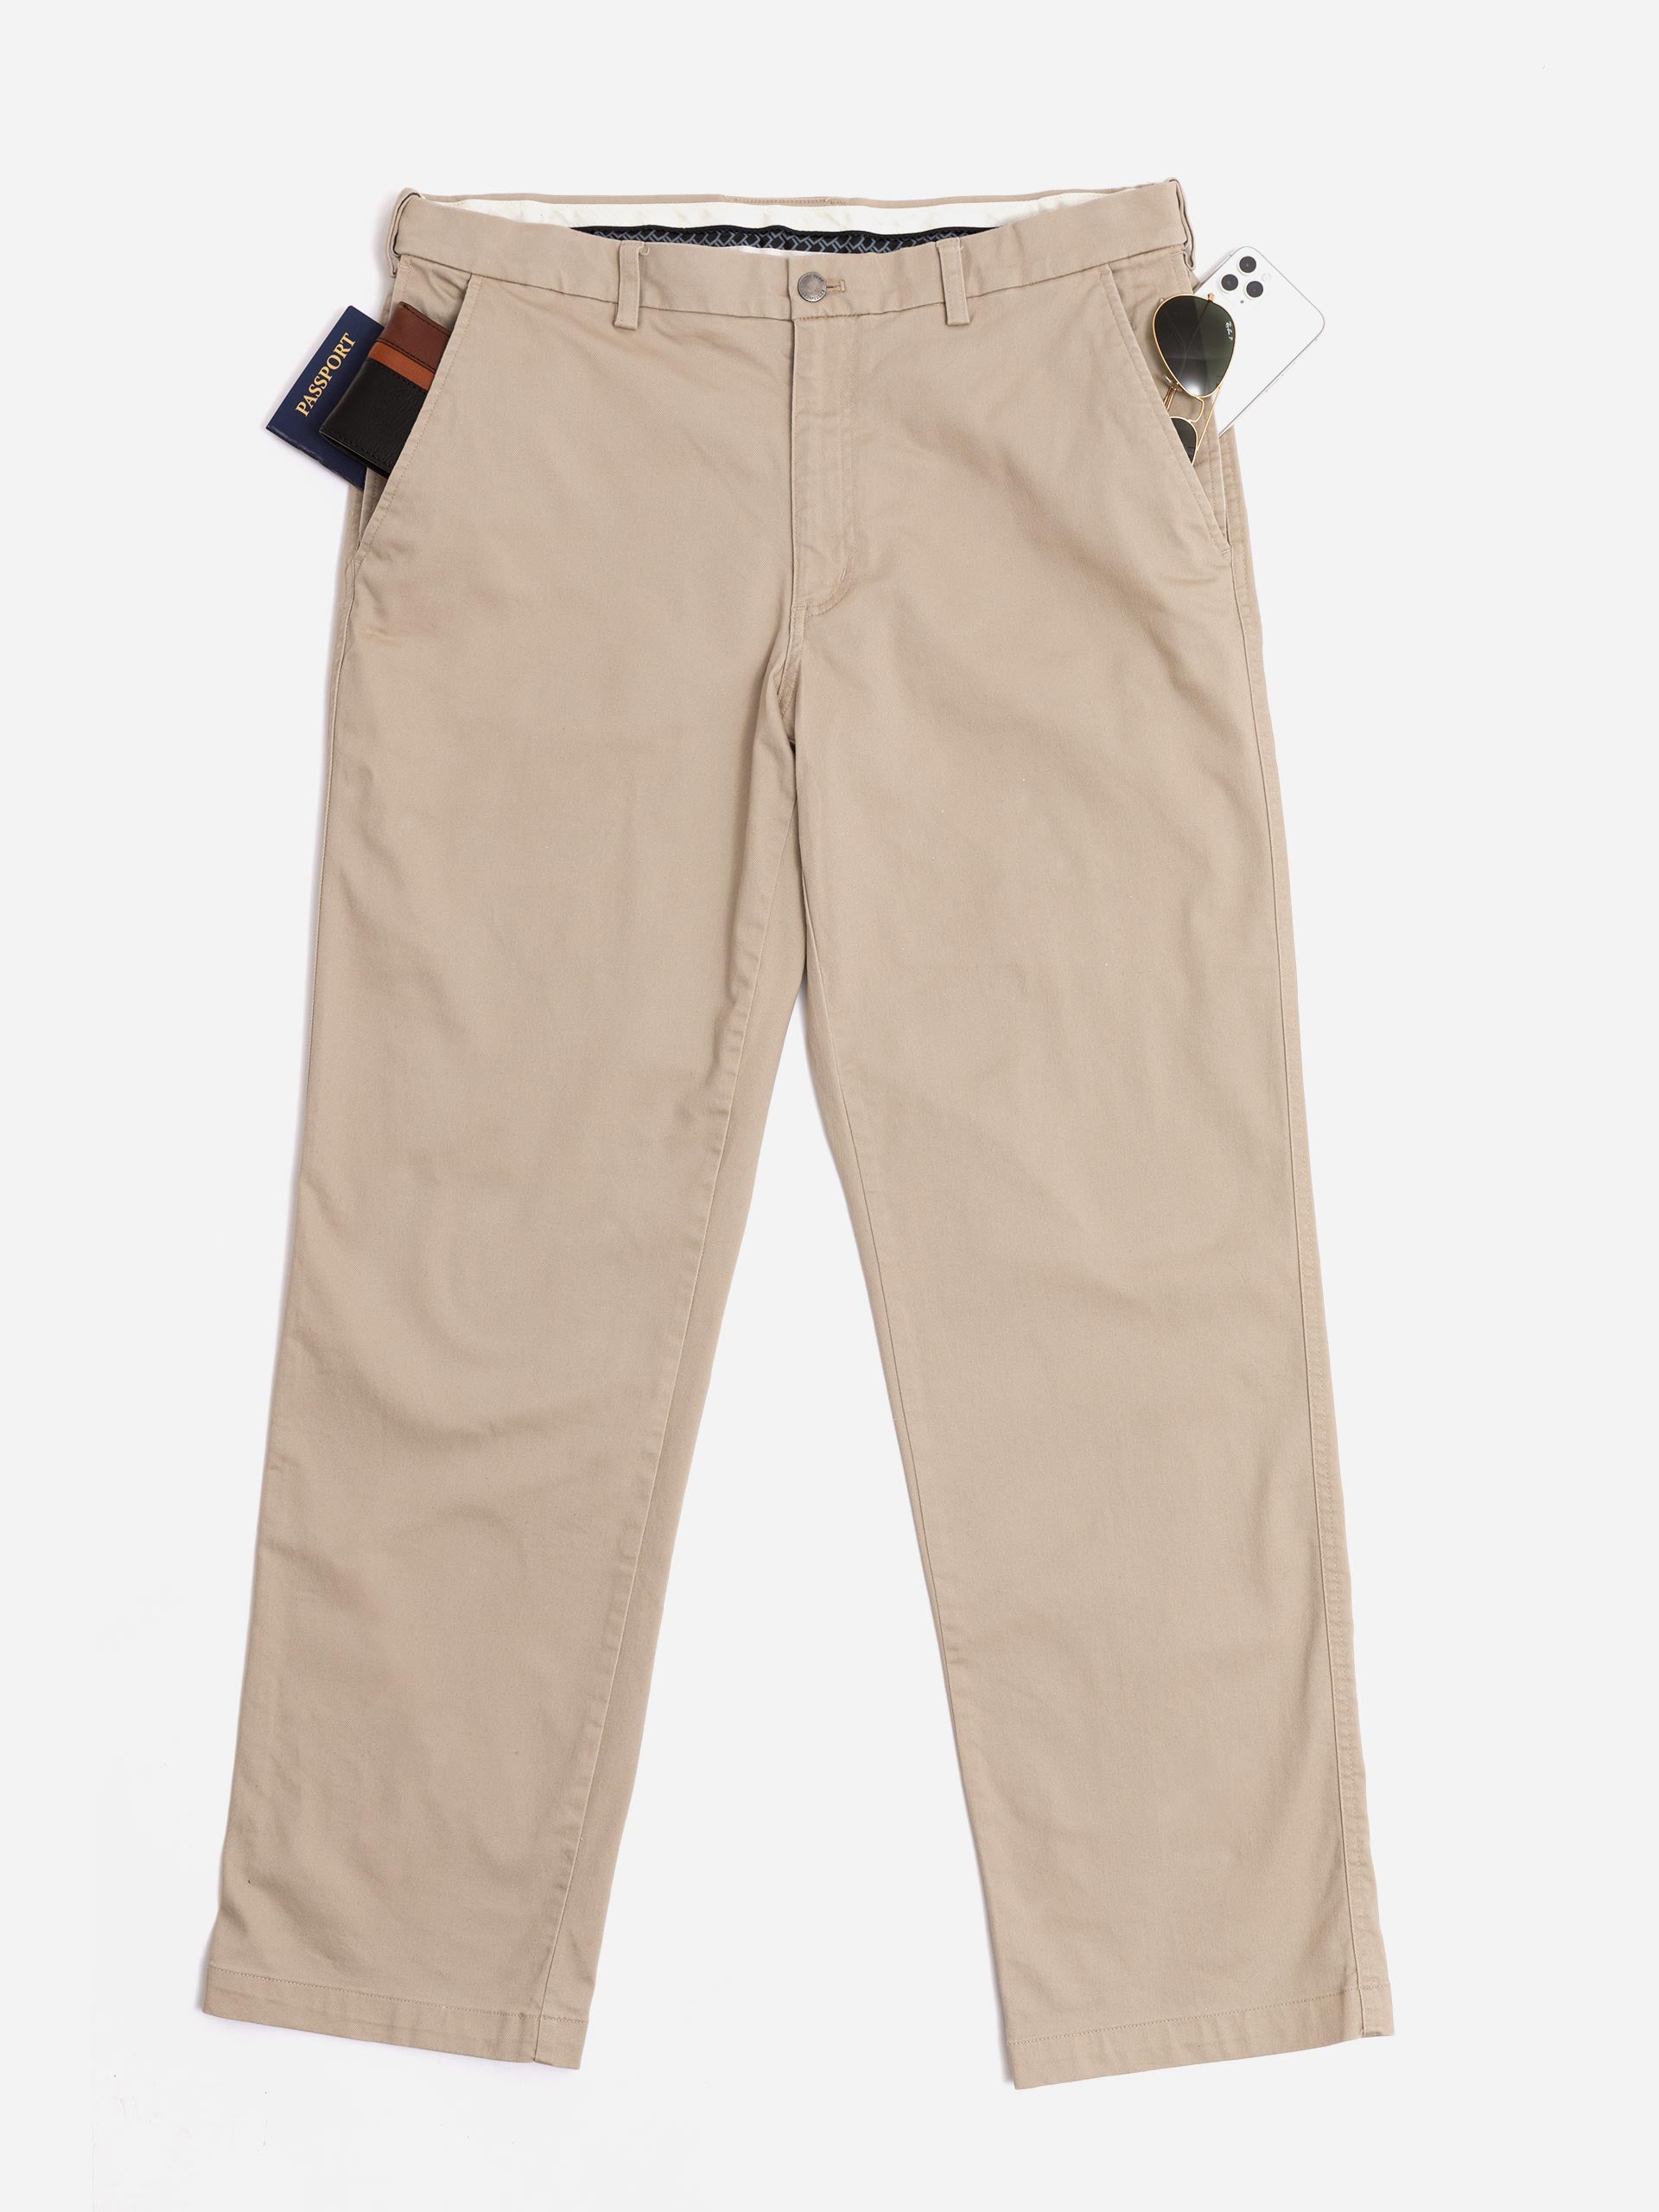 Duluth Trading Womens Cargo Pants sz 12 x 29 Brown (32 X 27.5)